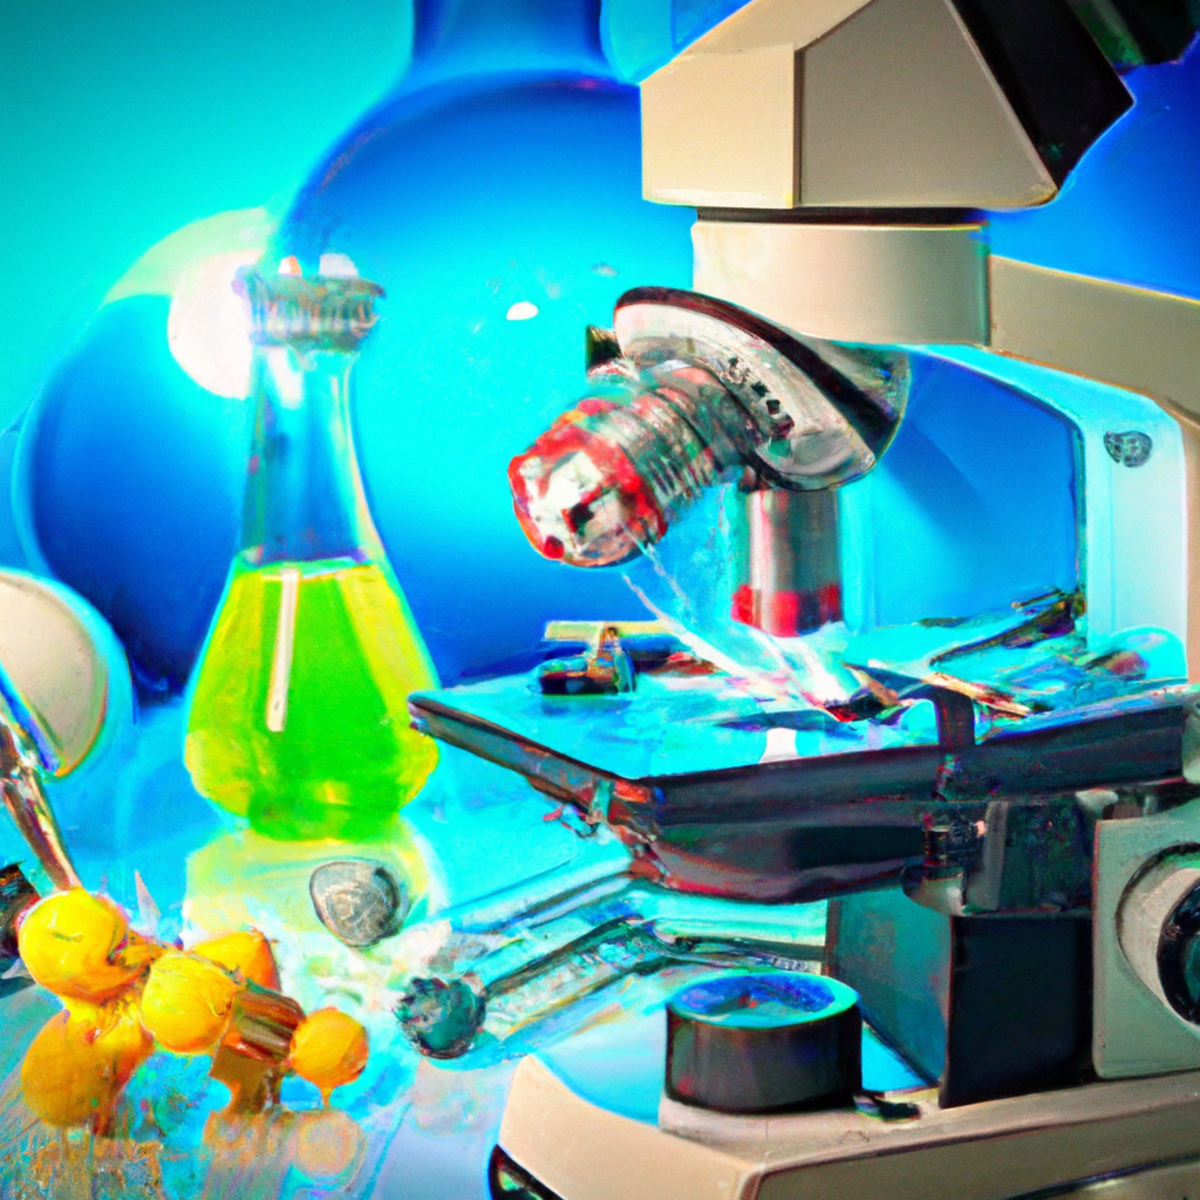 Vibrant lab scene with microscope and scientific tools, representing groundbreaking research progress in Menetrier's Disease.